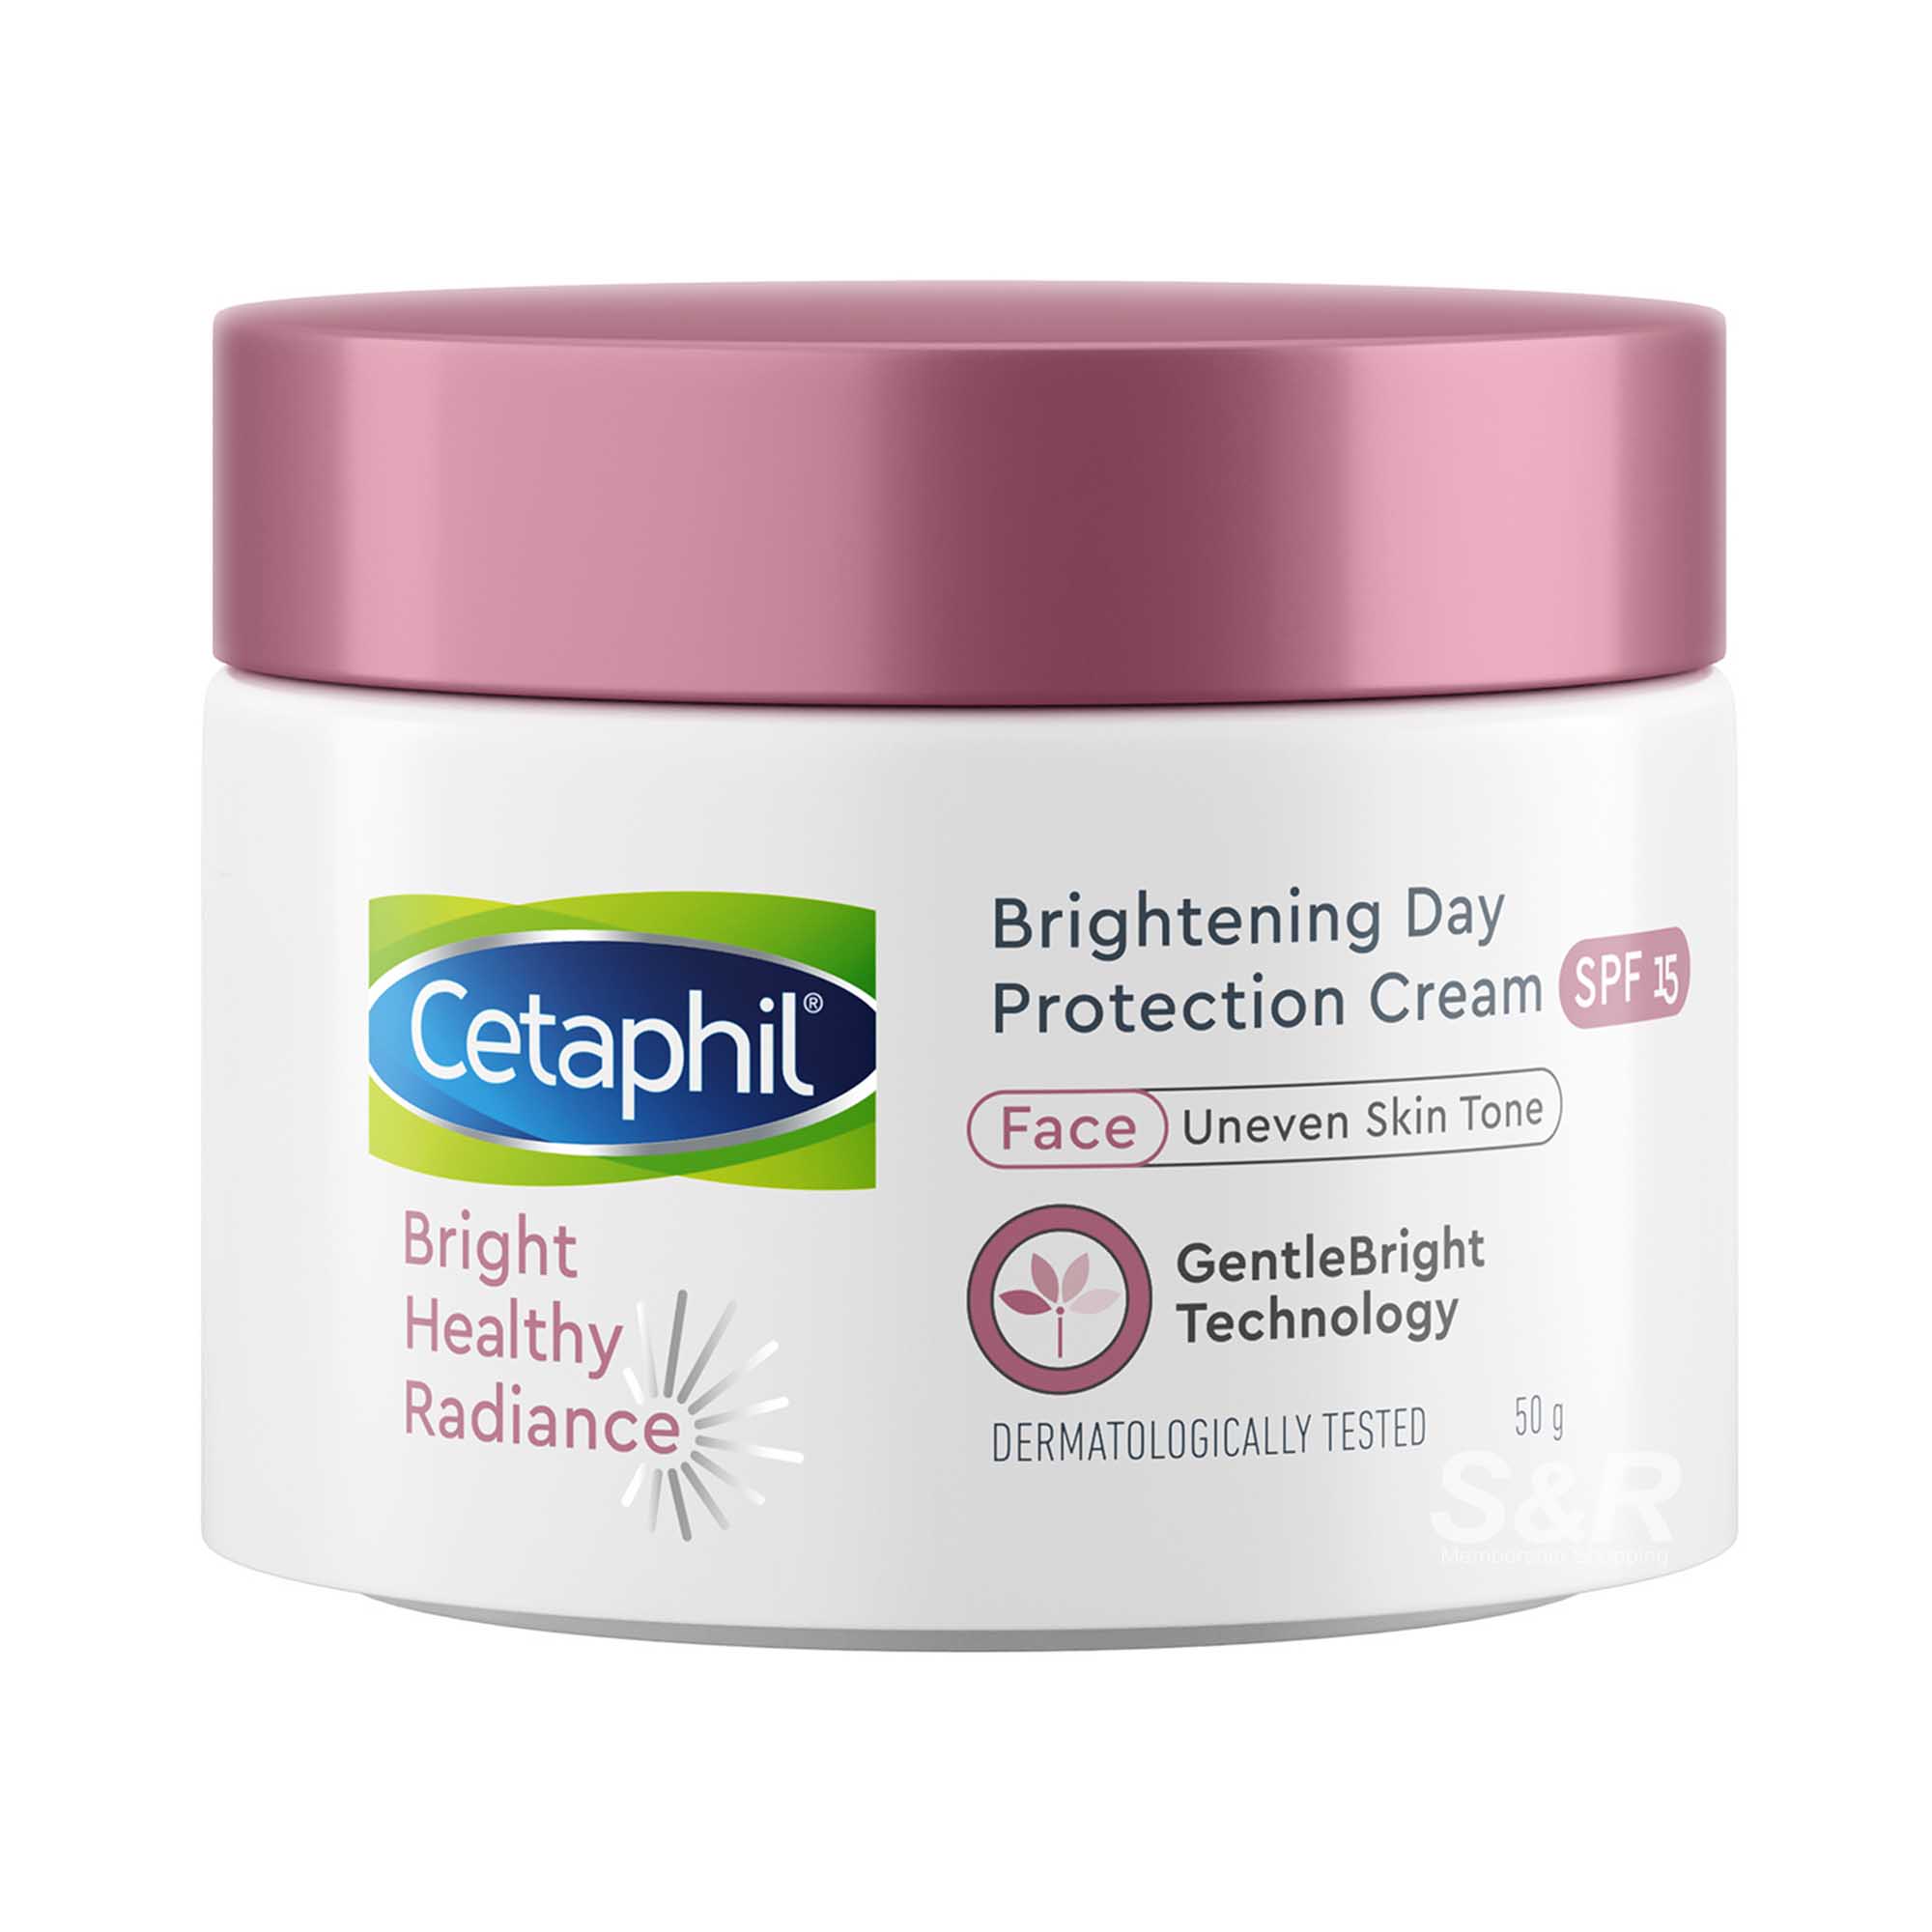 Cetaphil Brightening Day Protection Cream SPF 15 50g